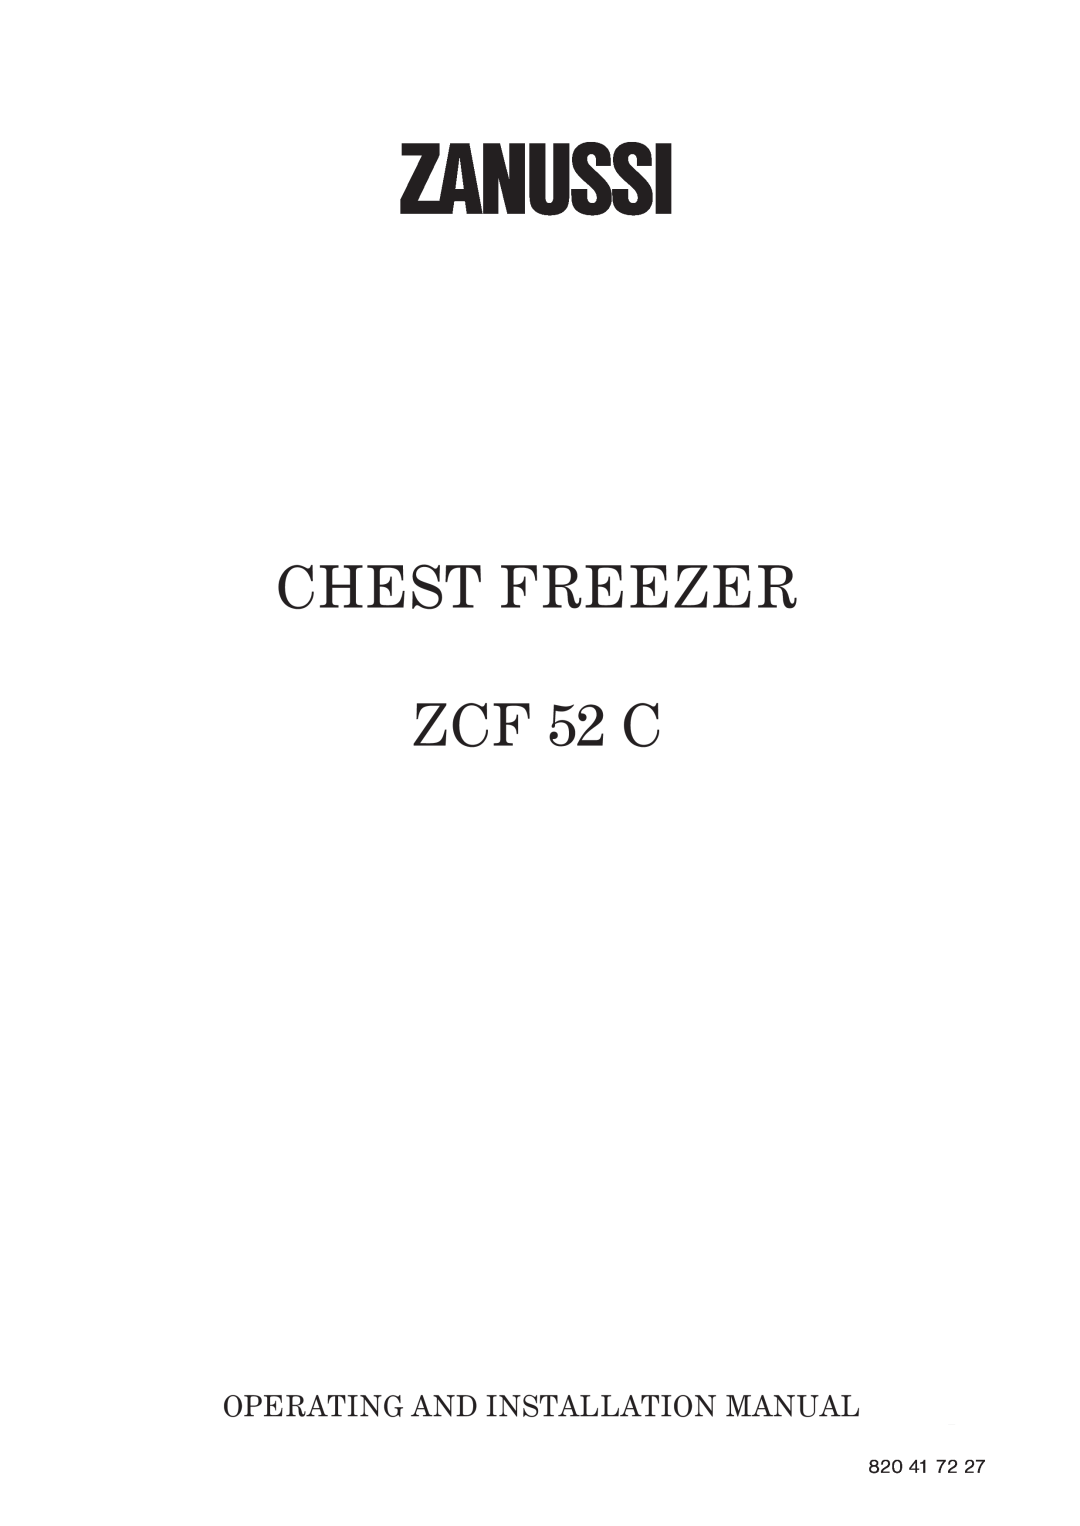 Zanussi installation manual Zanussi, CHEST FREEZER ZCF 52 C, Operating And Installation Manual 